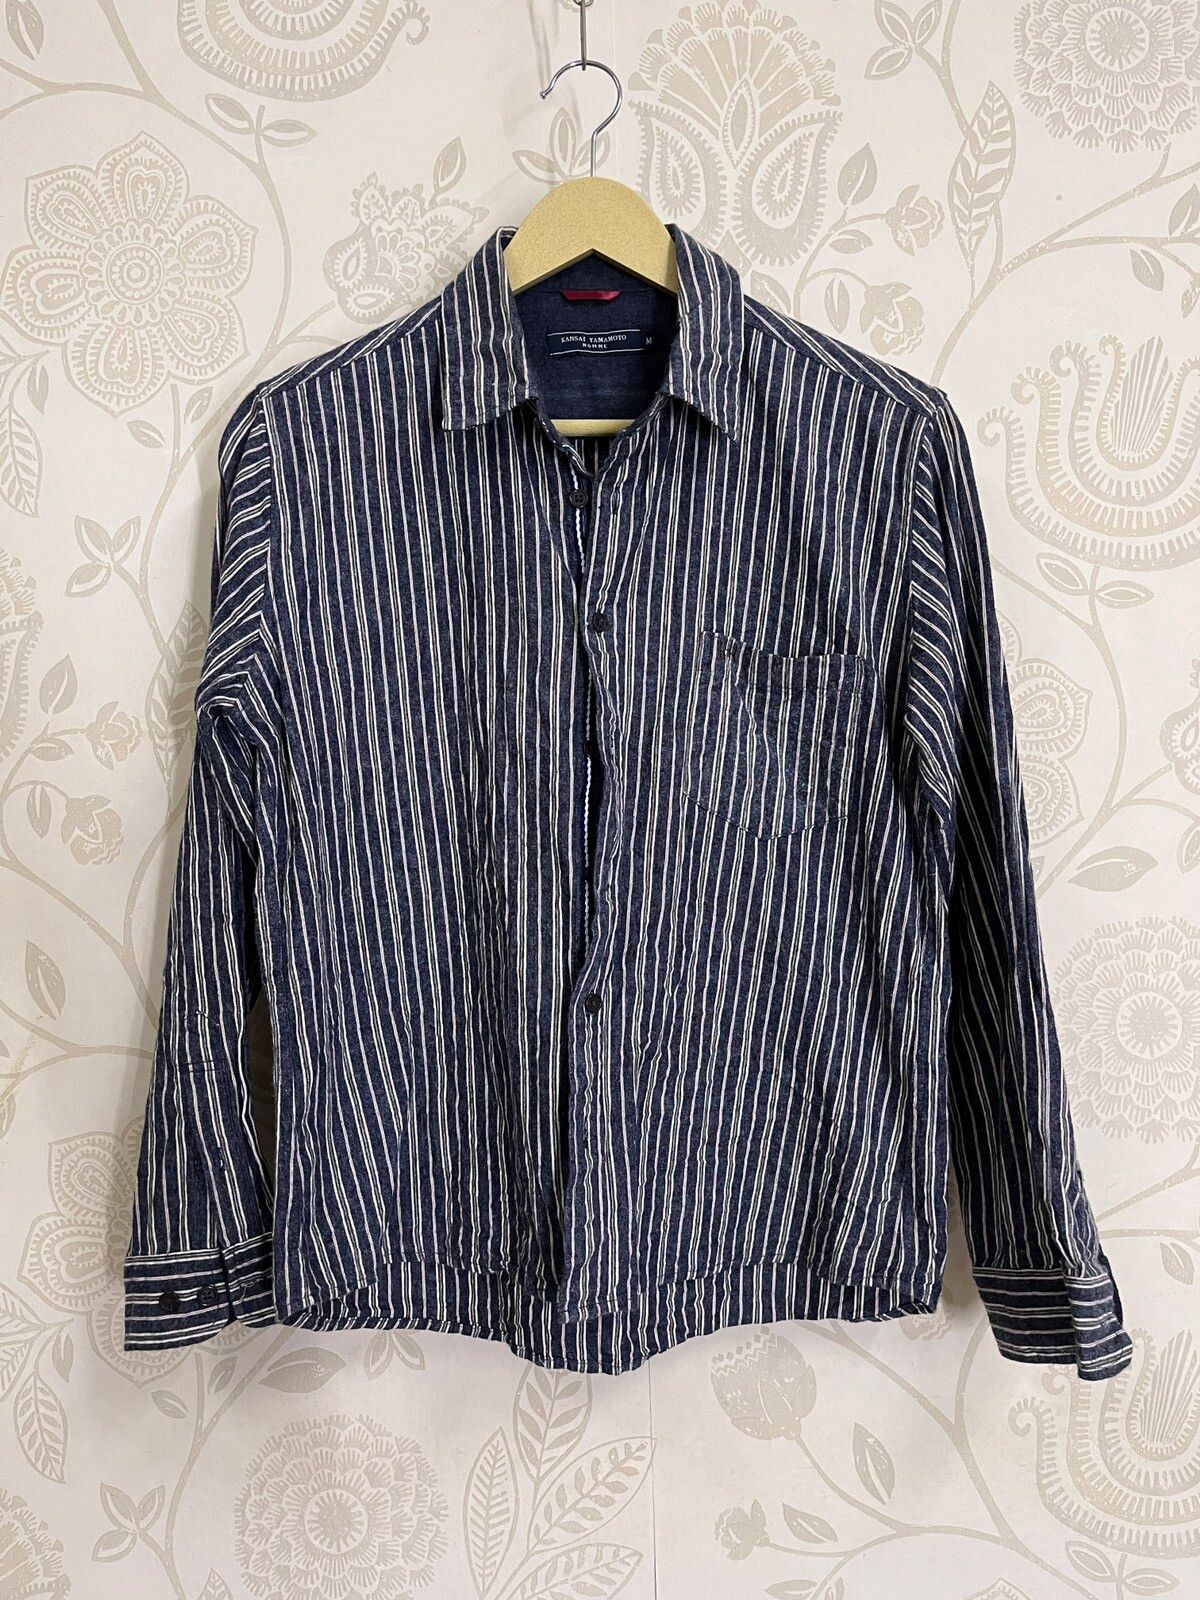 Vintage - Grails Kansai Yamamoto Button Up Shirts Japan Designer - 1